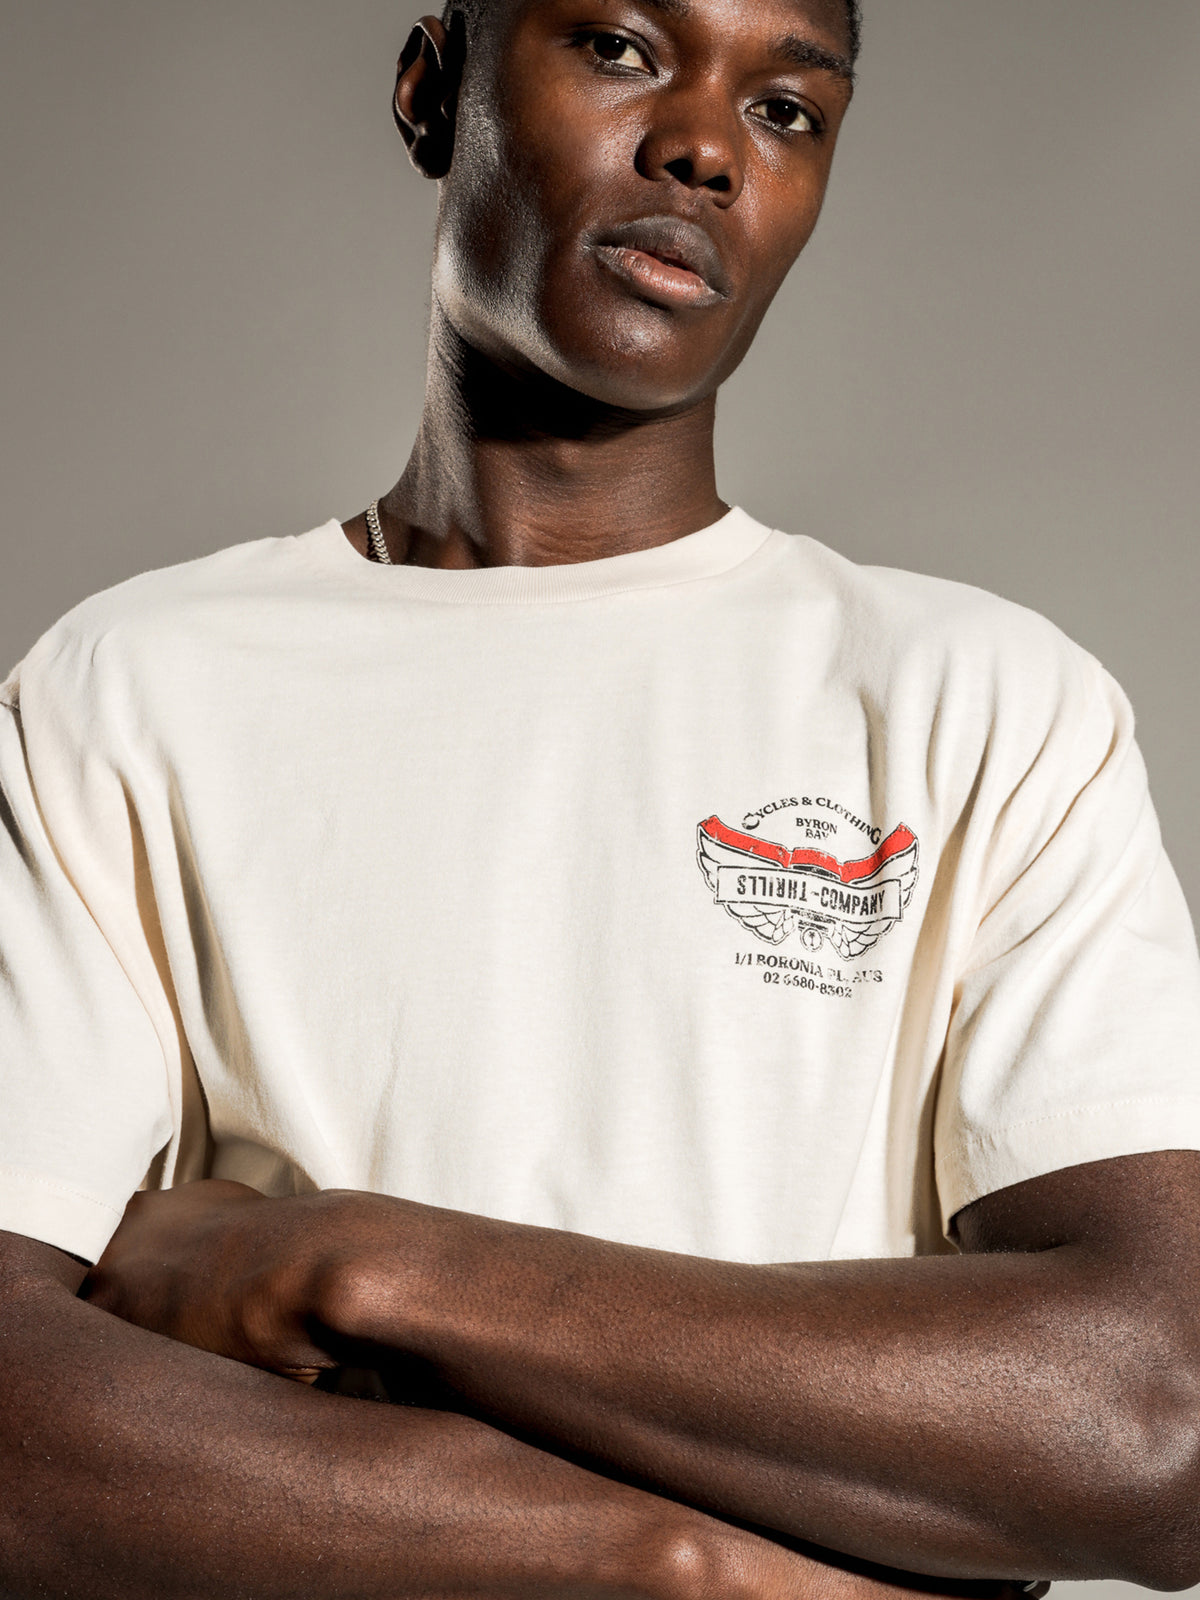 C&amp;C Wings Merch T-Shirt in Heritage White